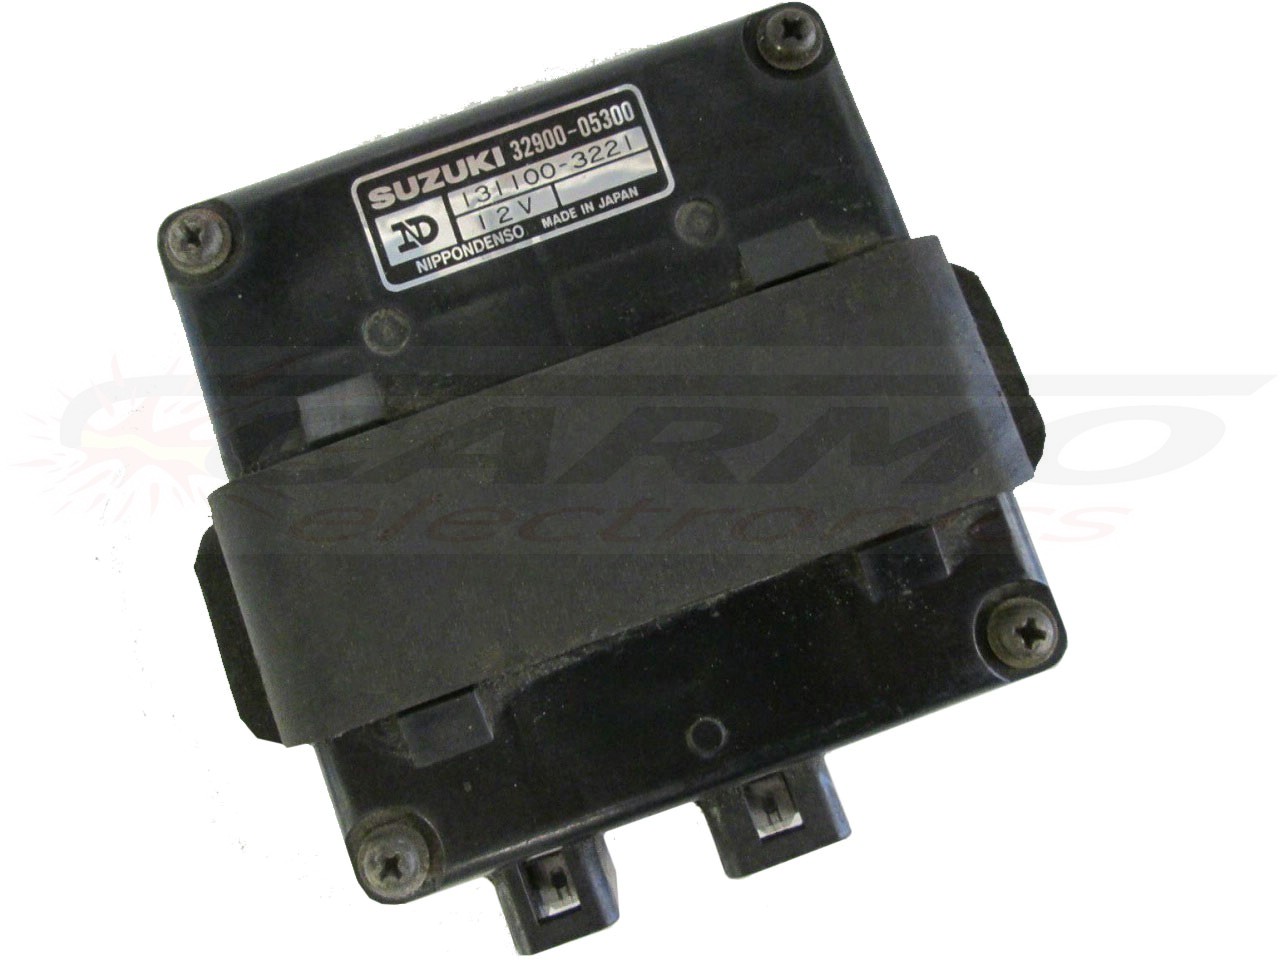 GN125 (32900-05300, 131100-3221) igniter ignition module CDI TCI Box